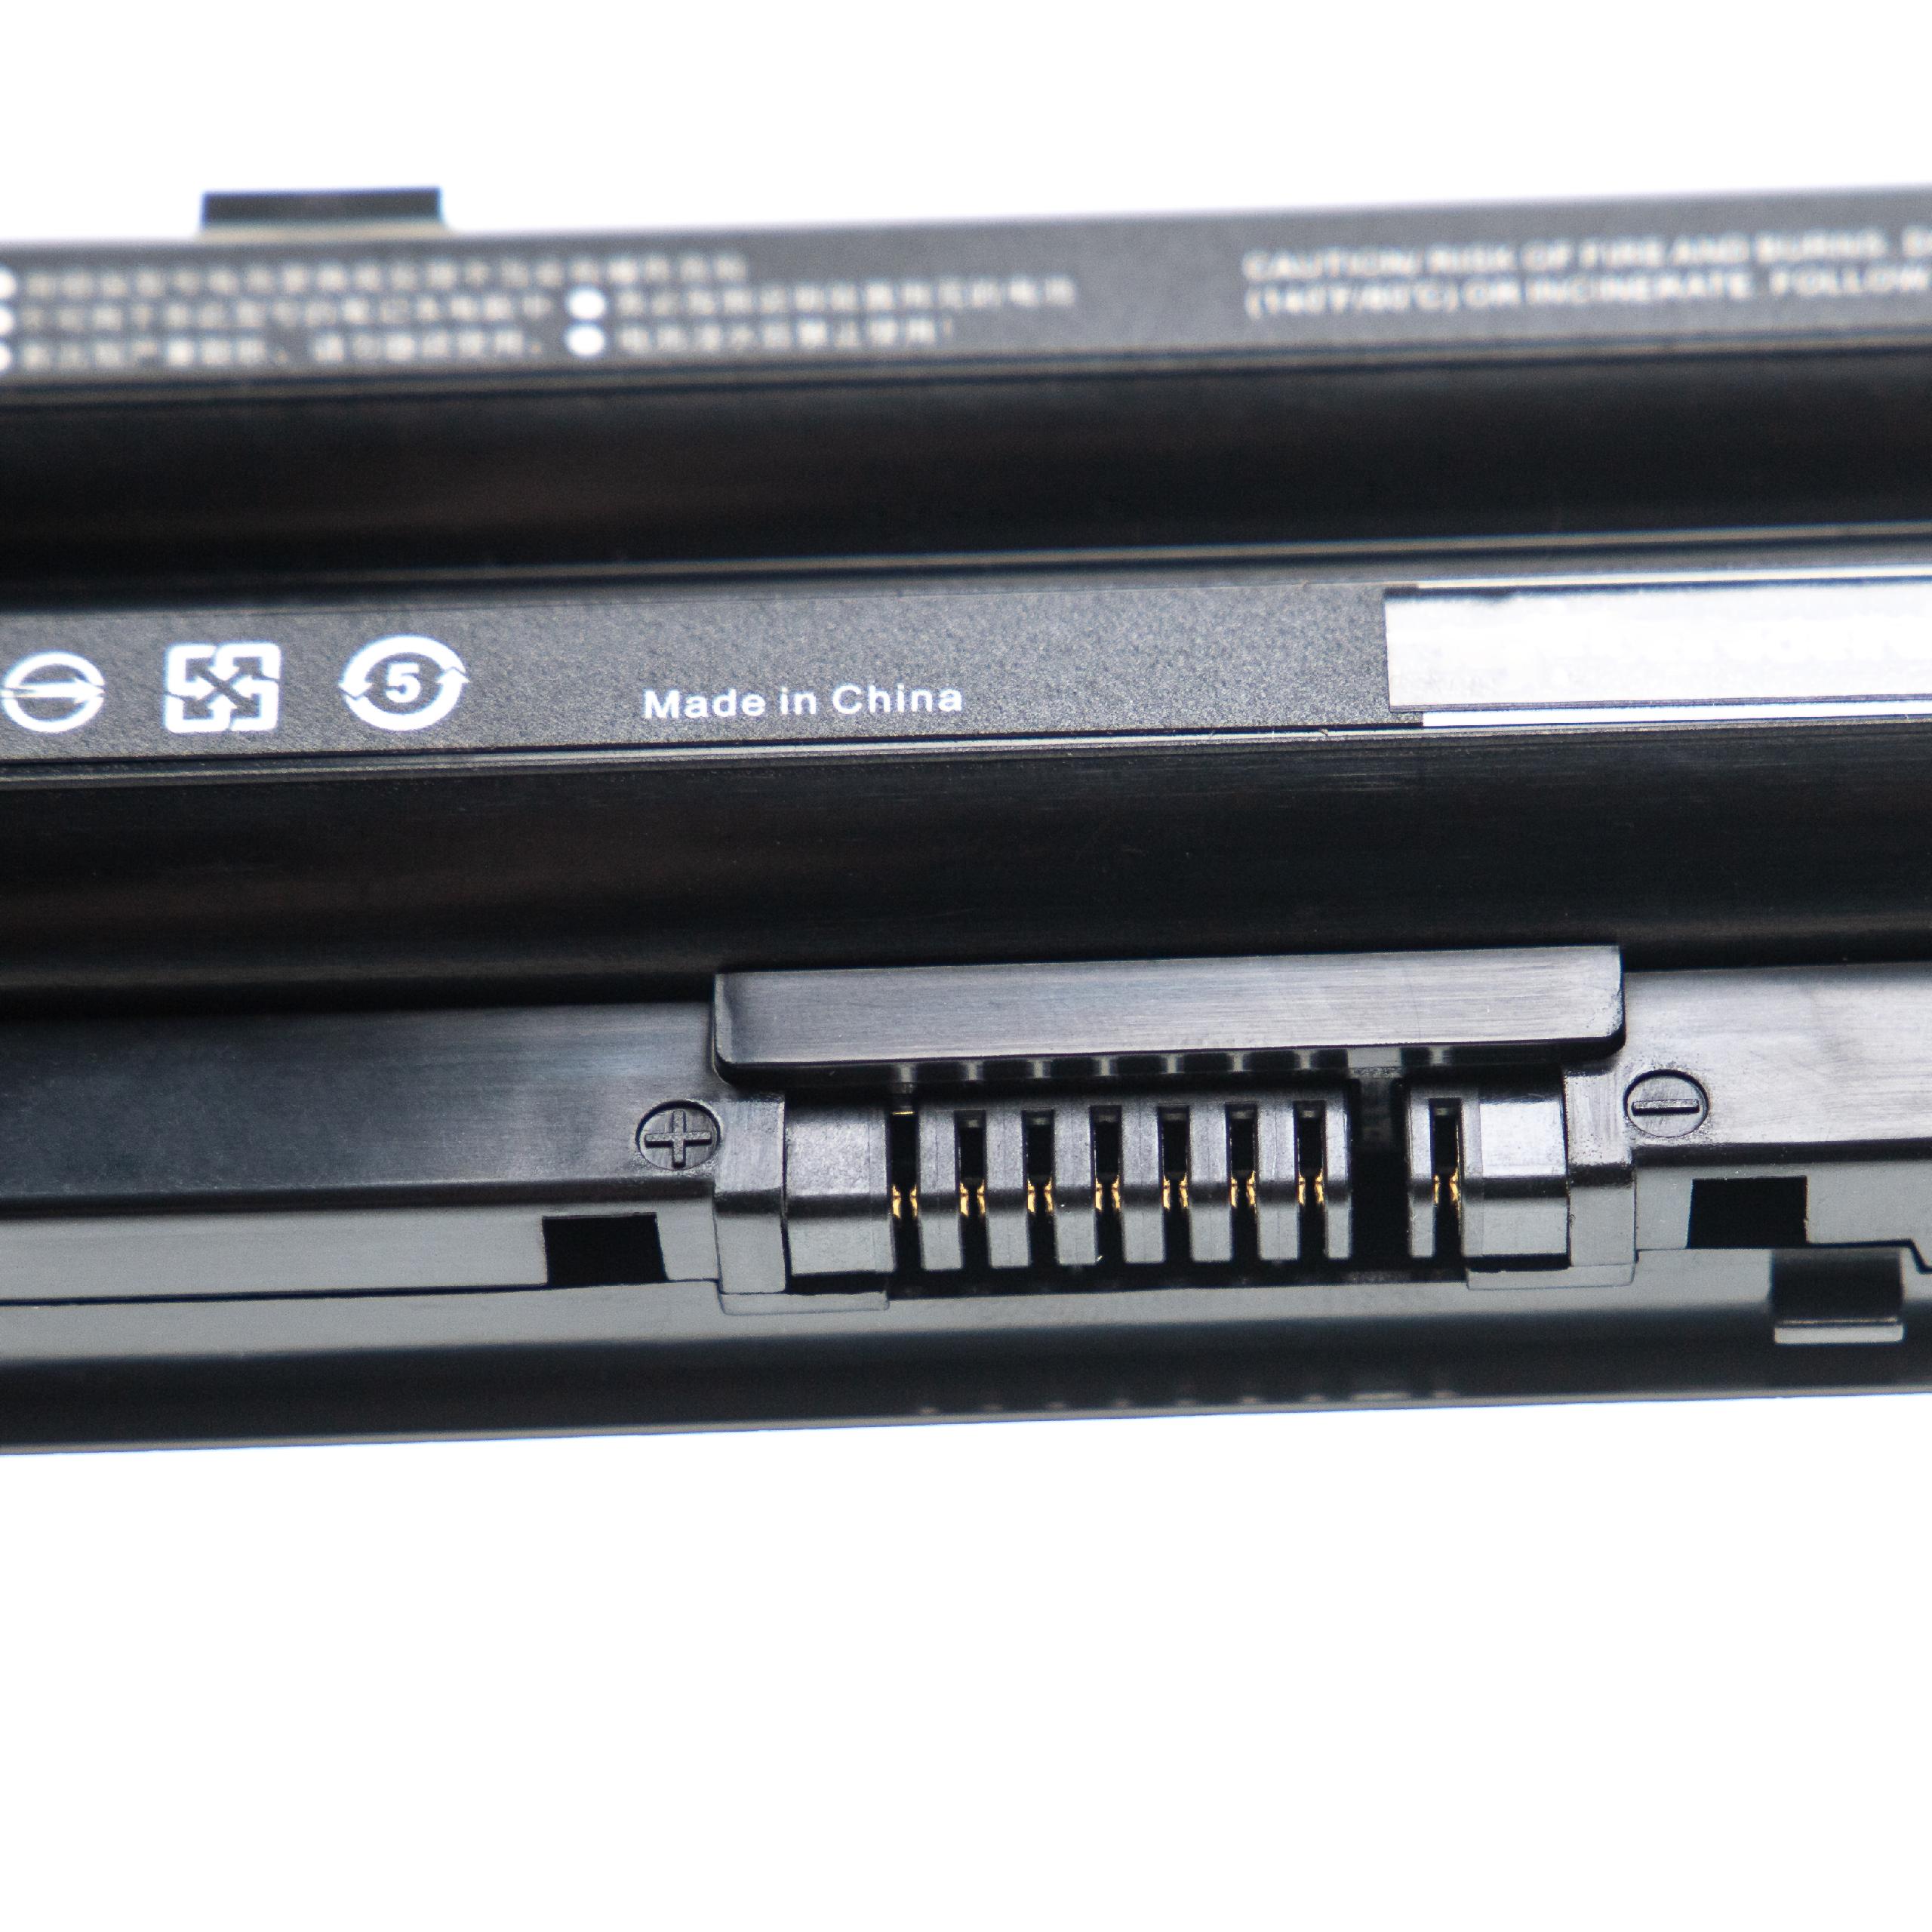 Akumulator do laptopa zamiennik Fujitsu BPS229, FMVNBP227A, BPS231 - 4400 mAh 10,8 V Li-Ion, czarny